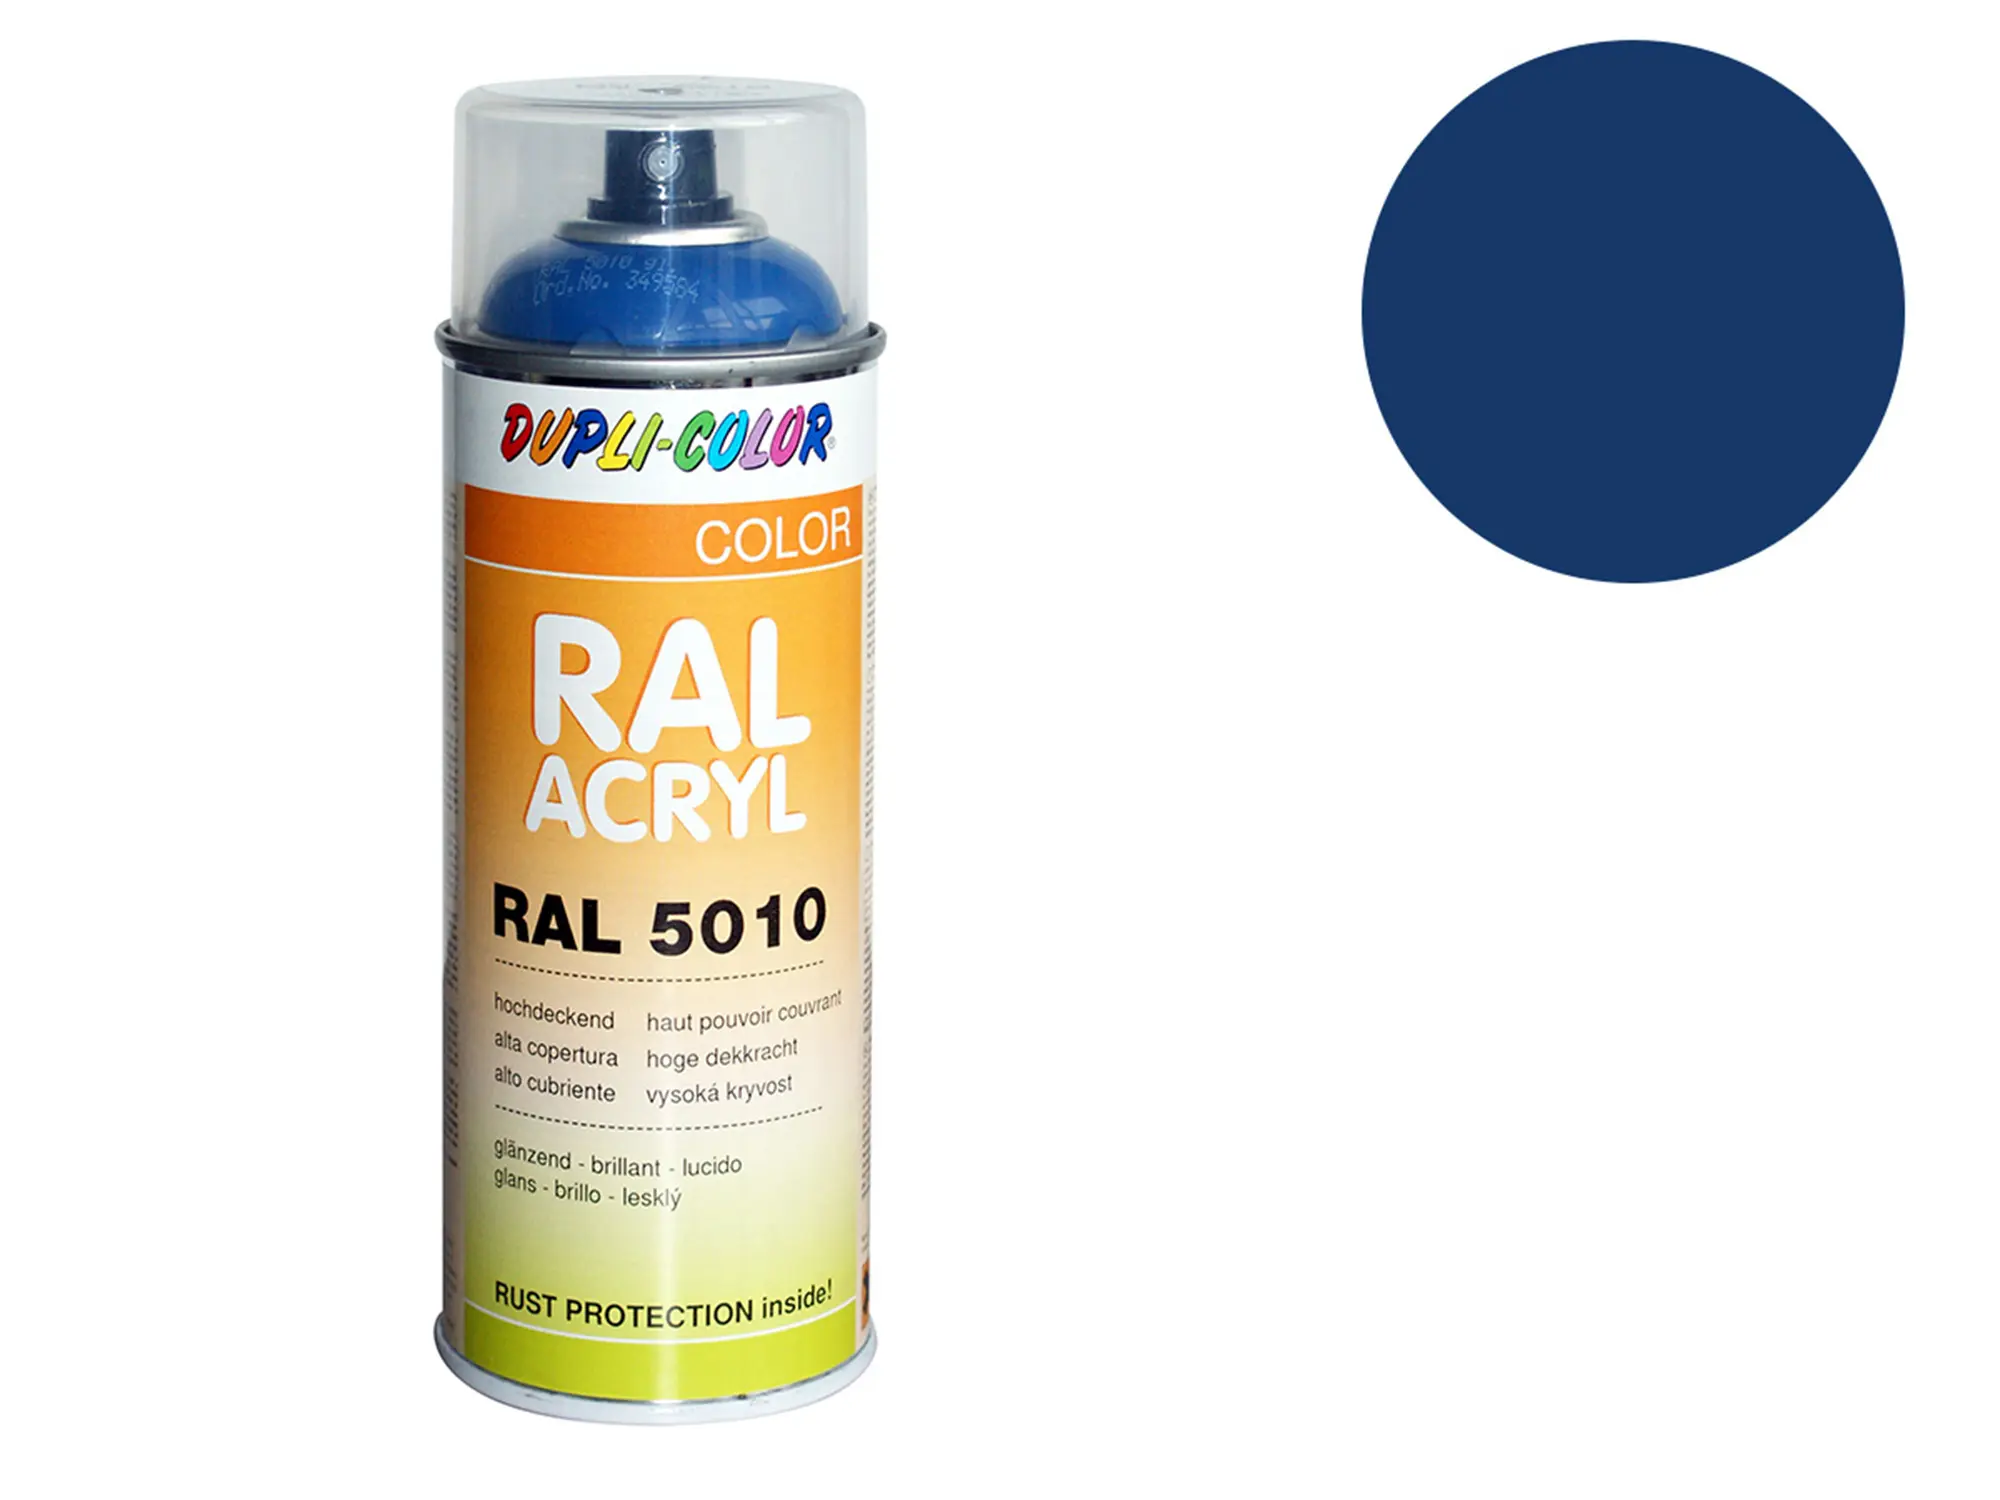 Dupli-Color Acryl-Spray RAL 5010 enzianblau, glänzend - 400 ml, Art.-Nr.: 10064793 - Bild 1